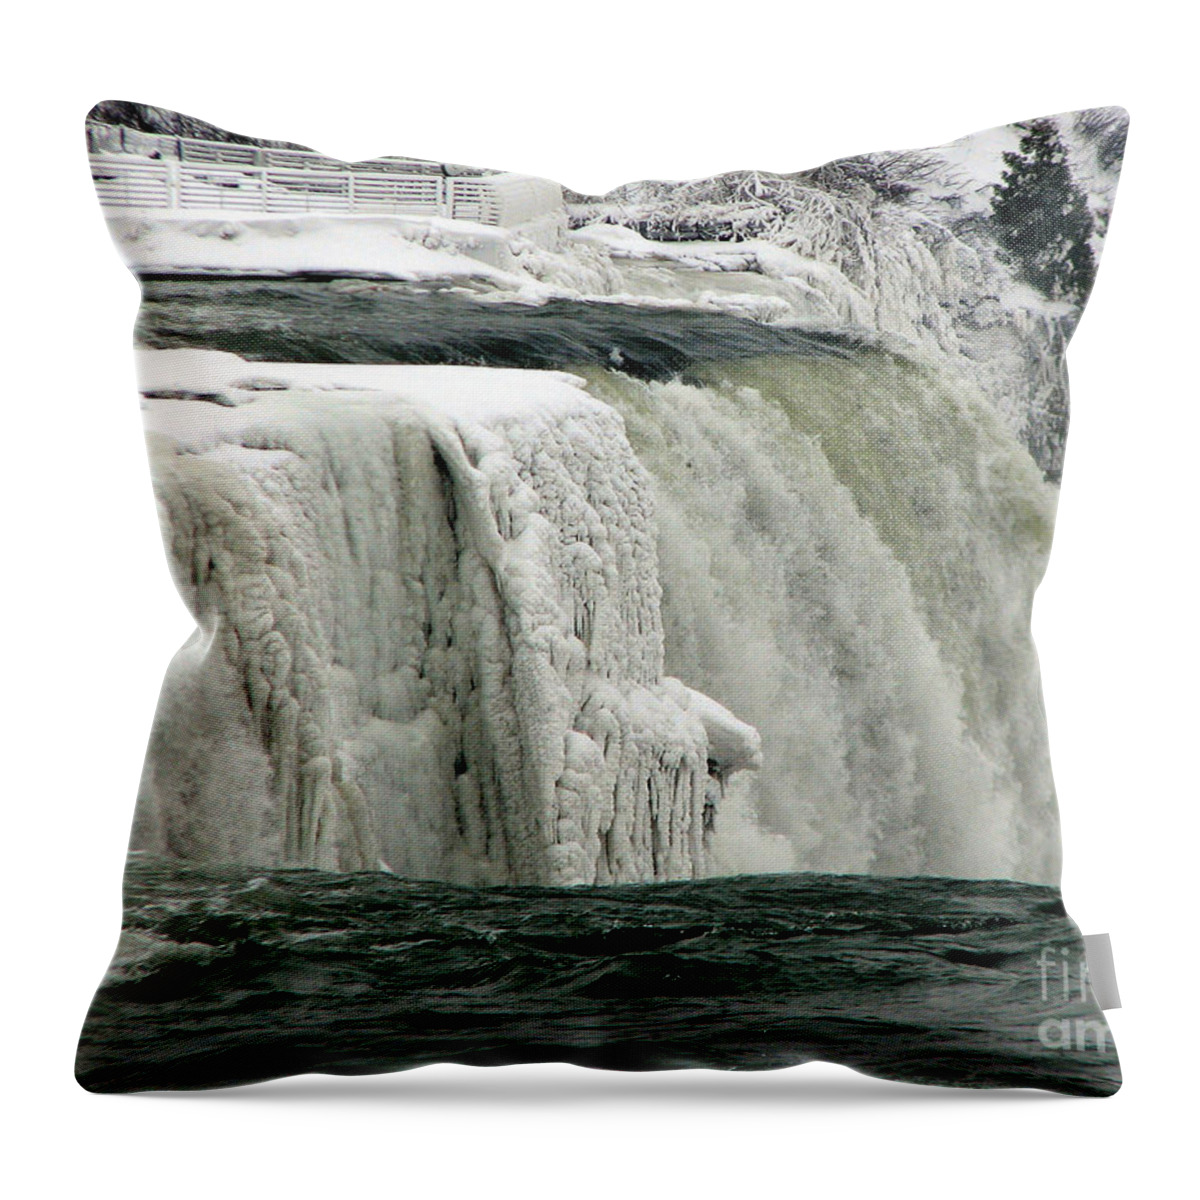 Niagara Falls Throw Pillow featuring the photograph Closeup of Icy Niagara Falls by Rose Santuci-Sofranko